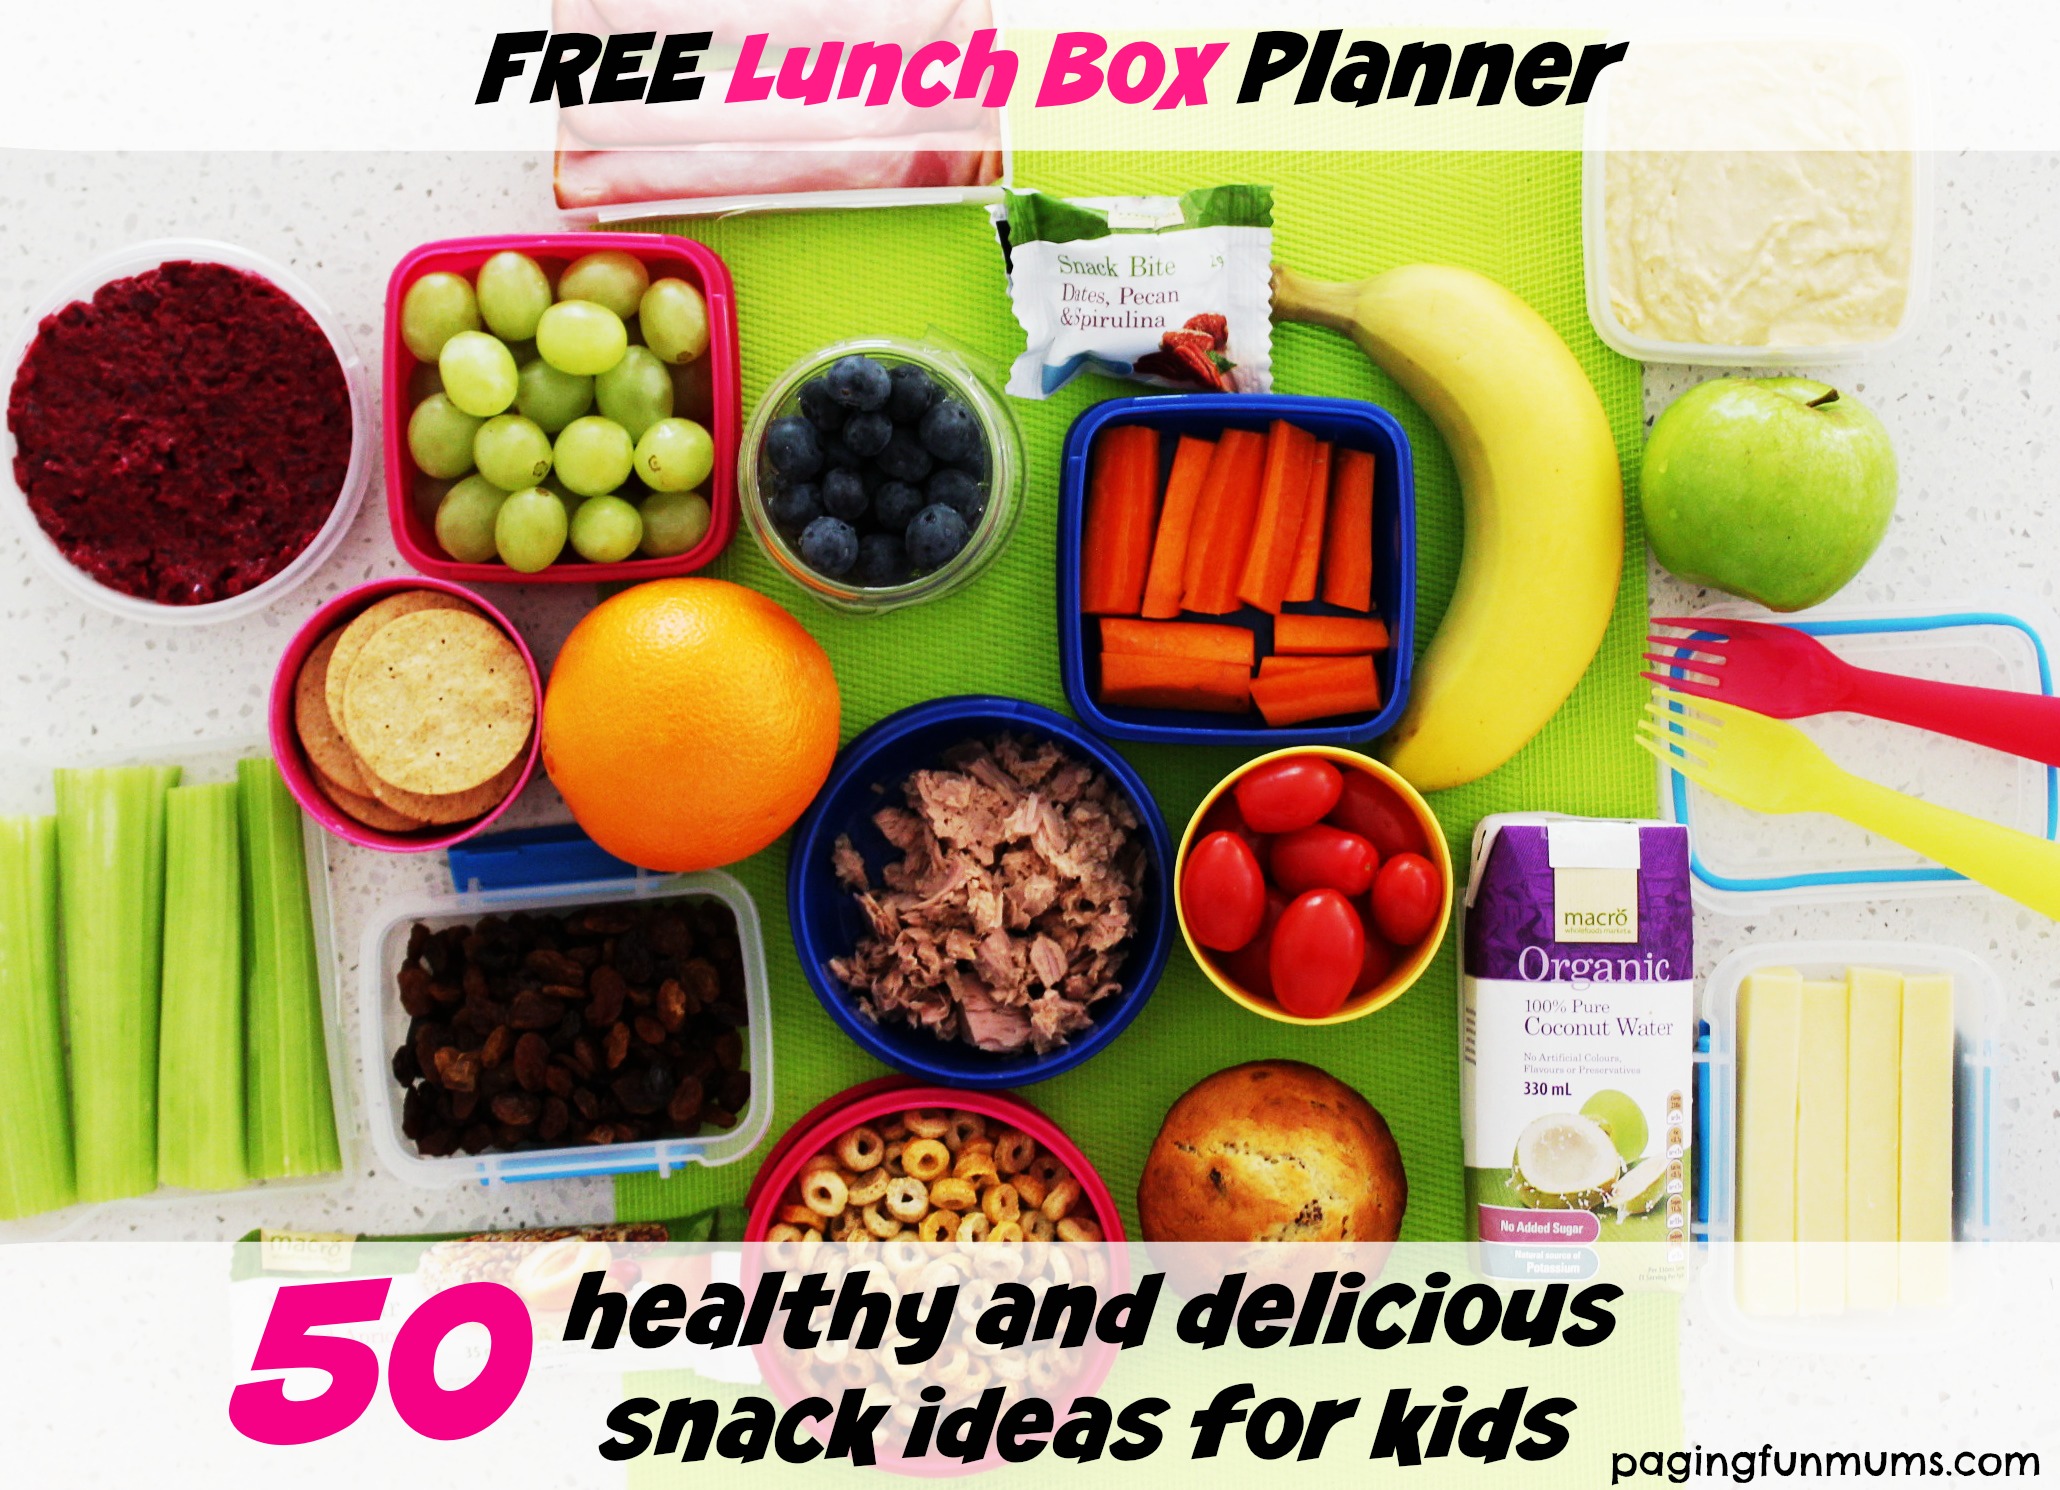 https://pagingfunmums.com/wp-content/uploads/2015/01/Lunch-Box-Planner.jpg